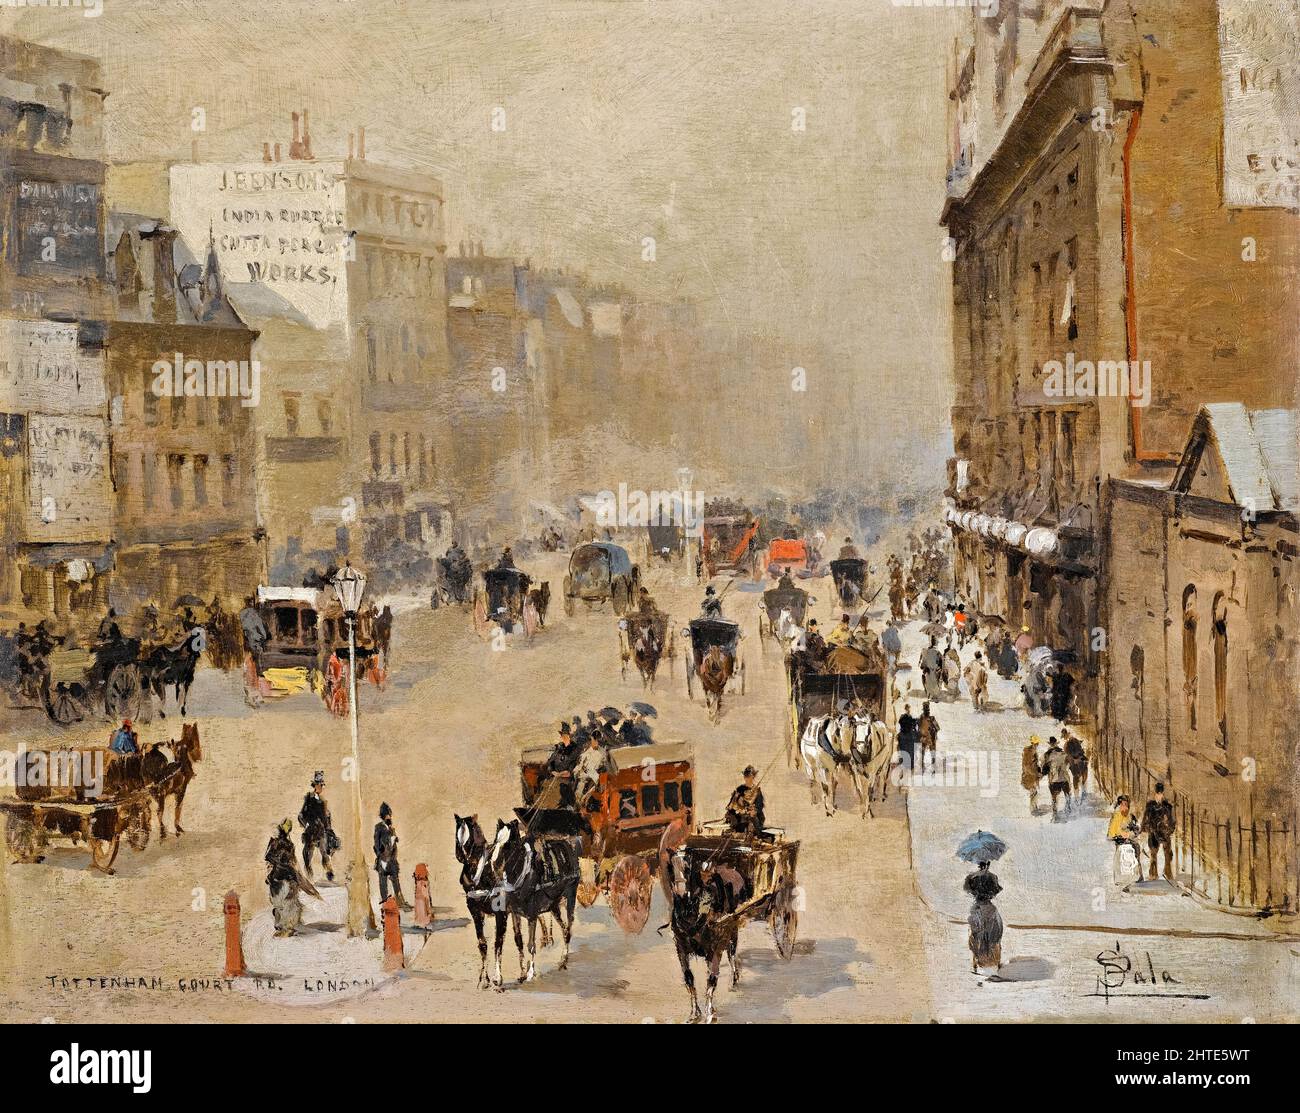 Viktorianisches London: Tottenham Court Road, London, Ende des 19.. Jahrhunderts Öl auf Tafelstraße Szene Gemälde von Paolo Sala, vor 1899 Stockfoto